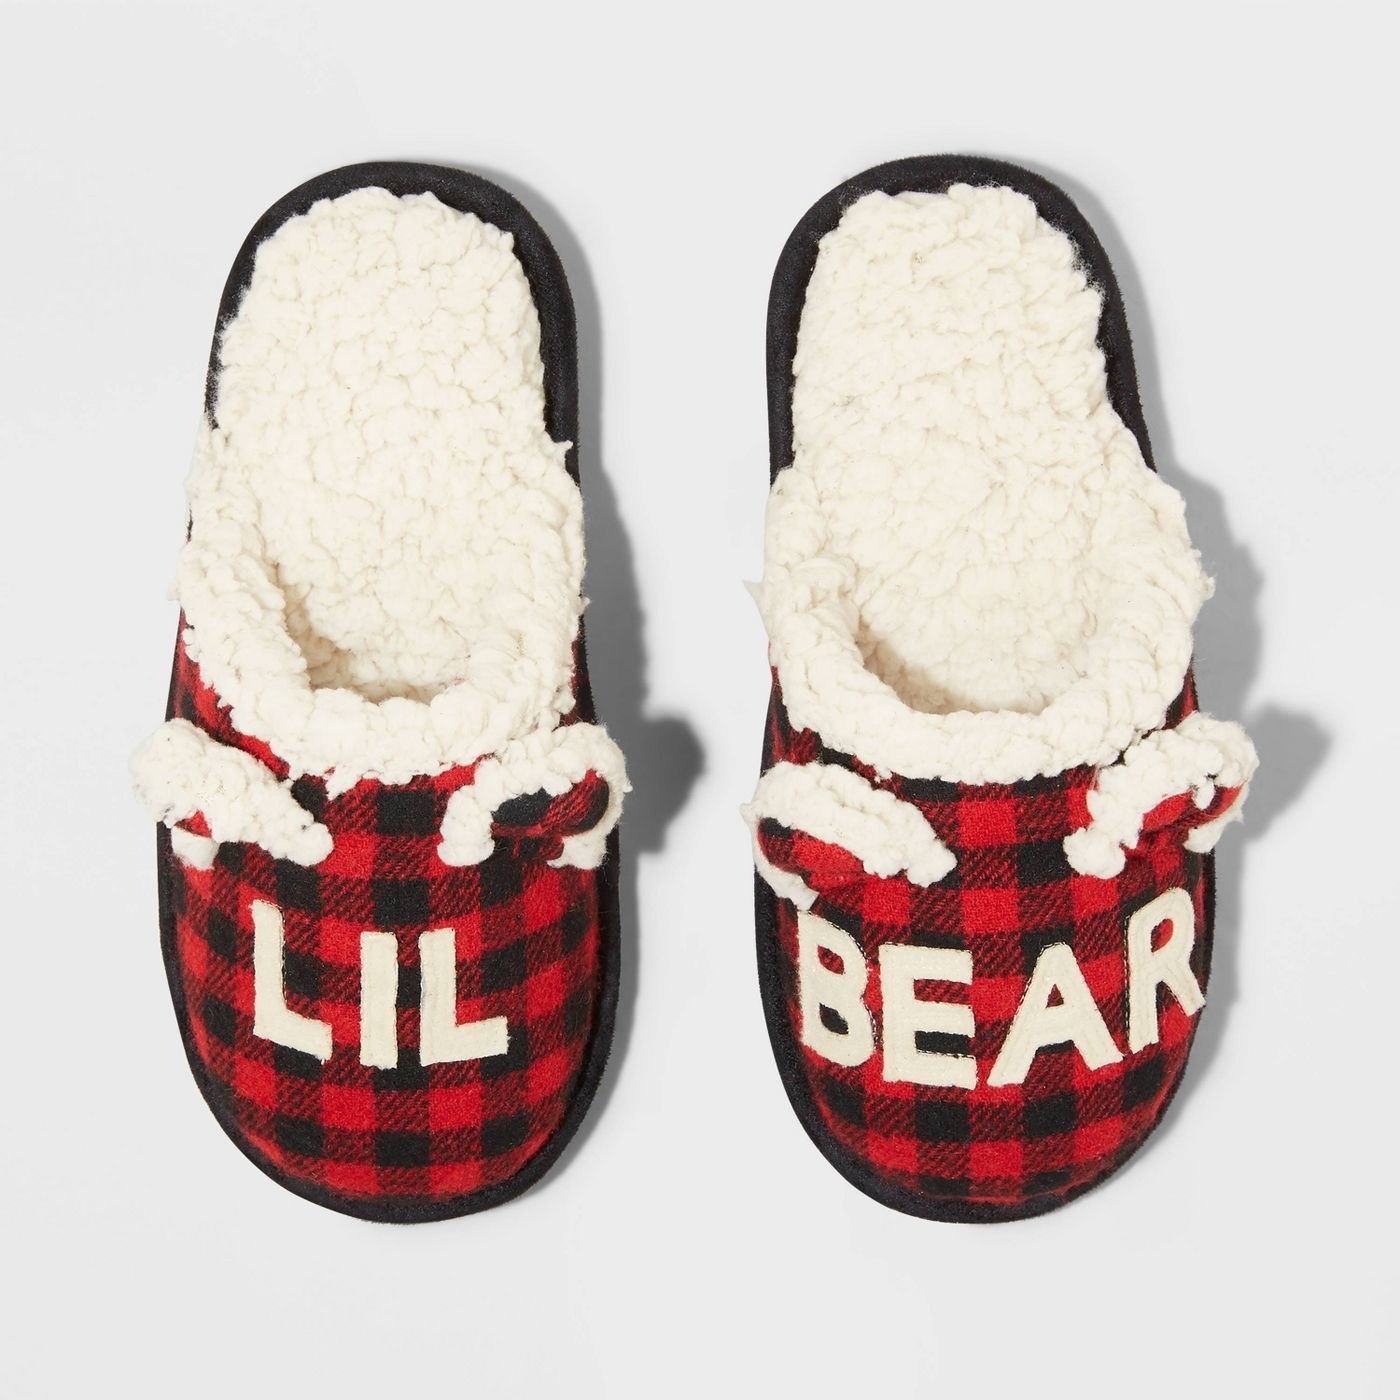 Lil bear slippers